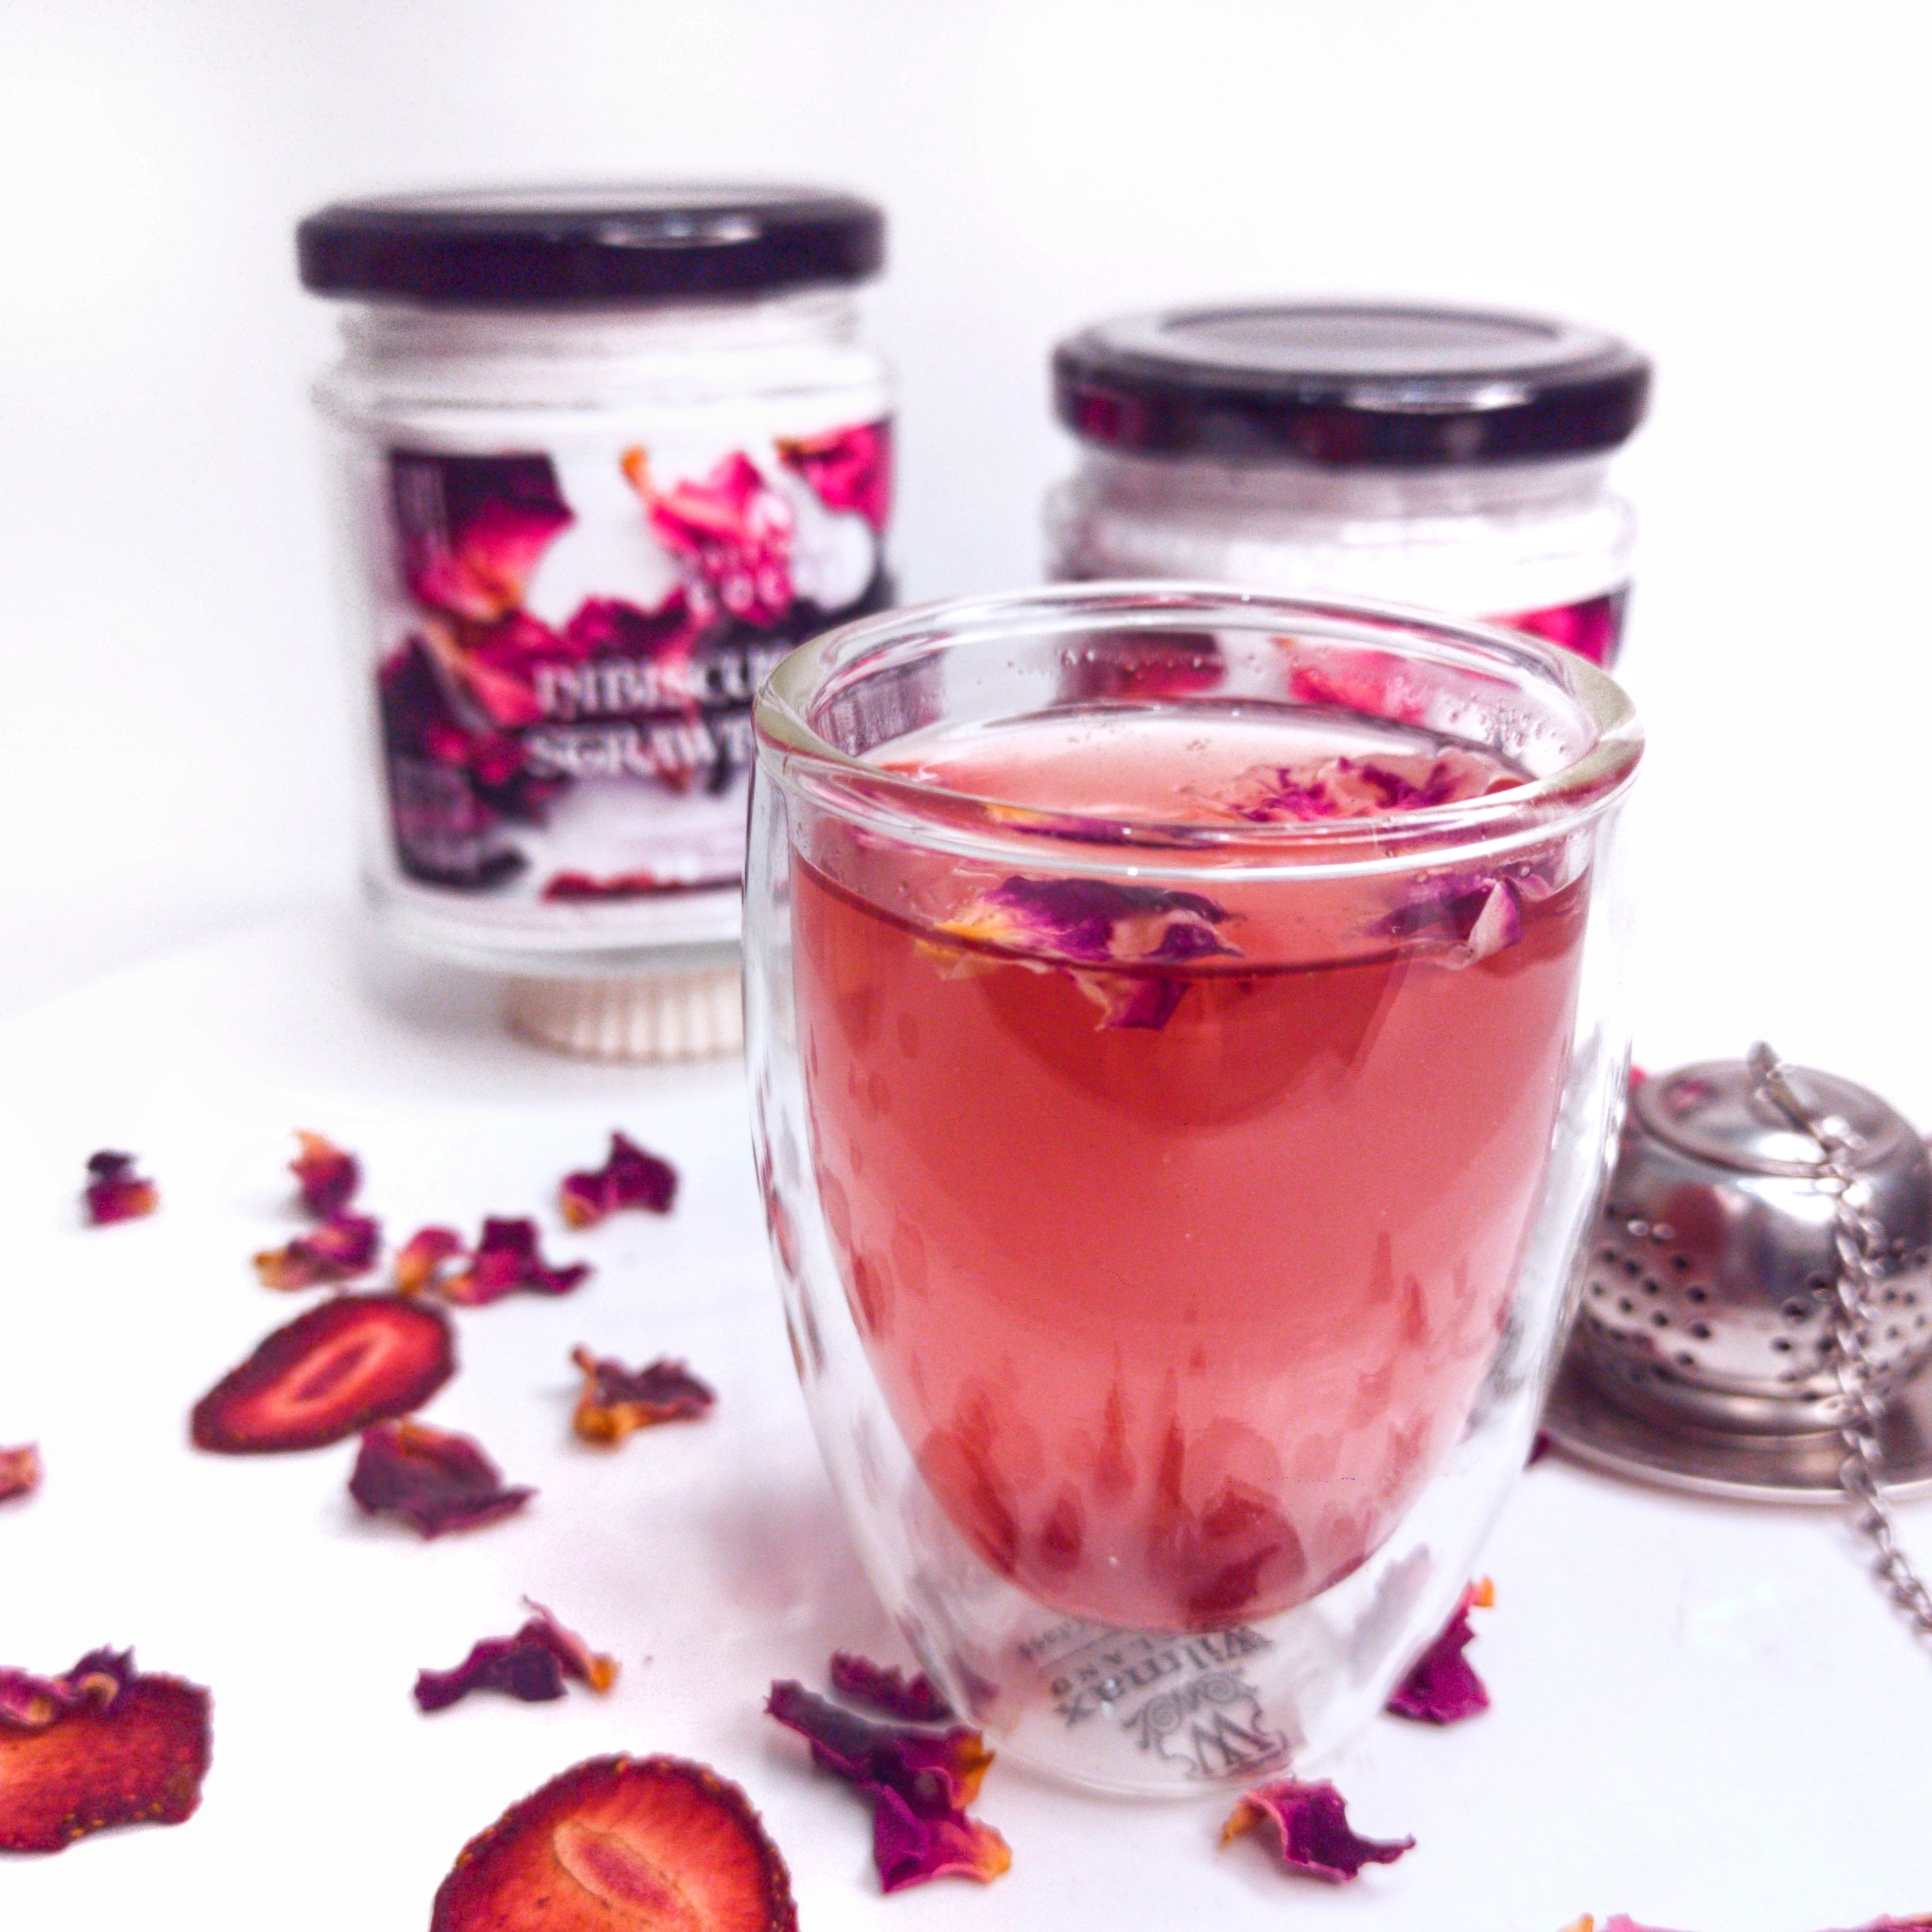 Hibiscus, Strawberry & Rose Tea Premix